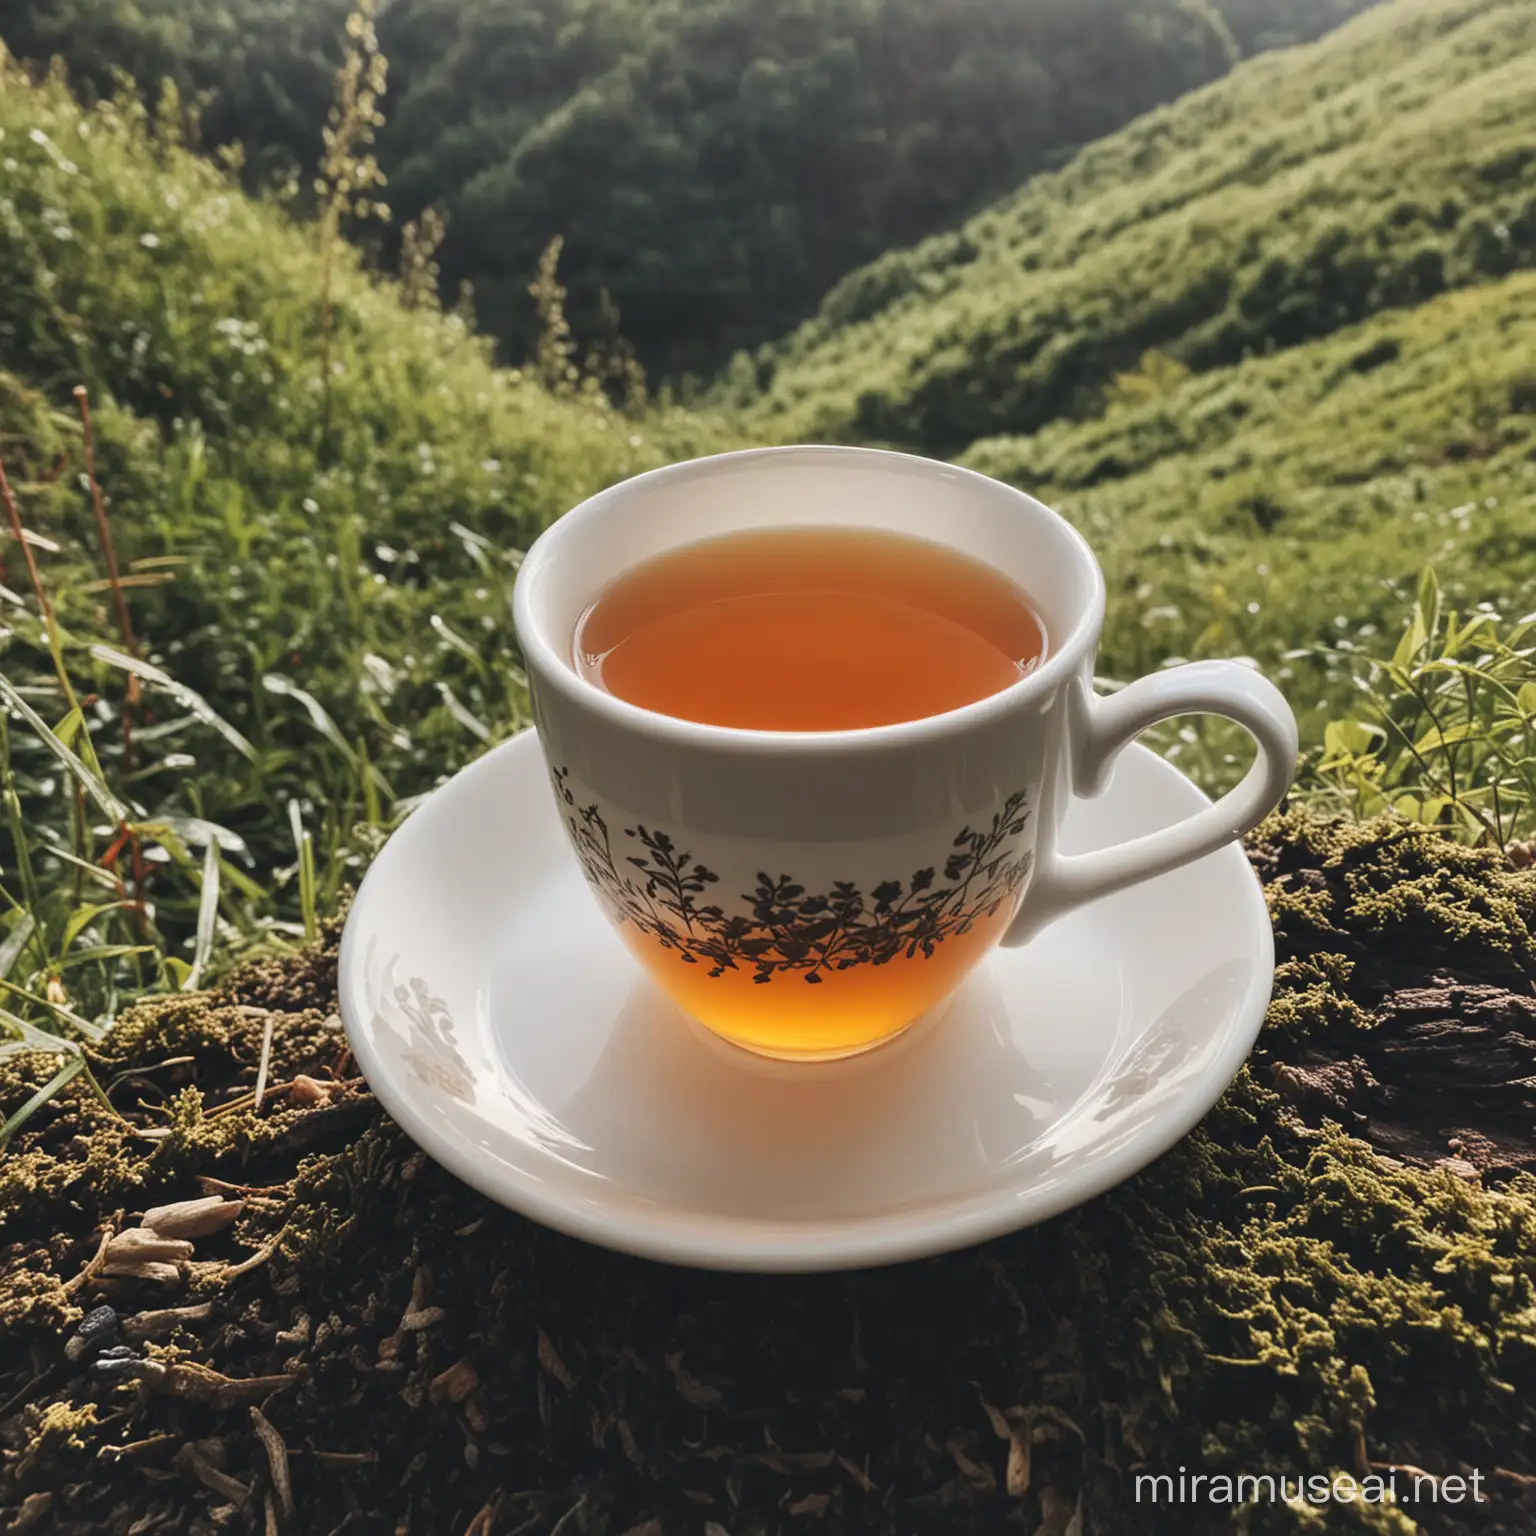 Serene Tea Drinking Amidst Natures Beauty